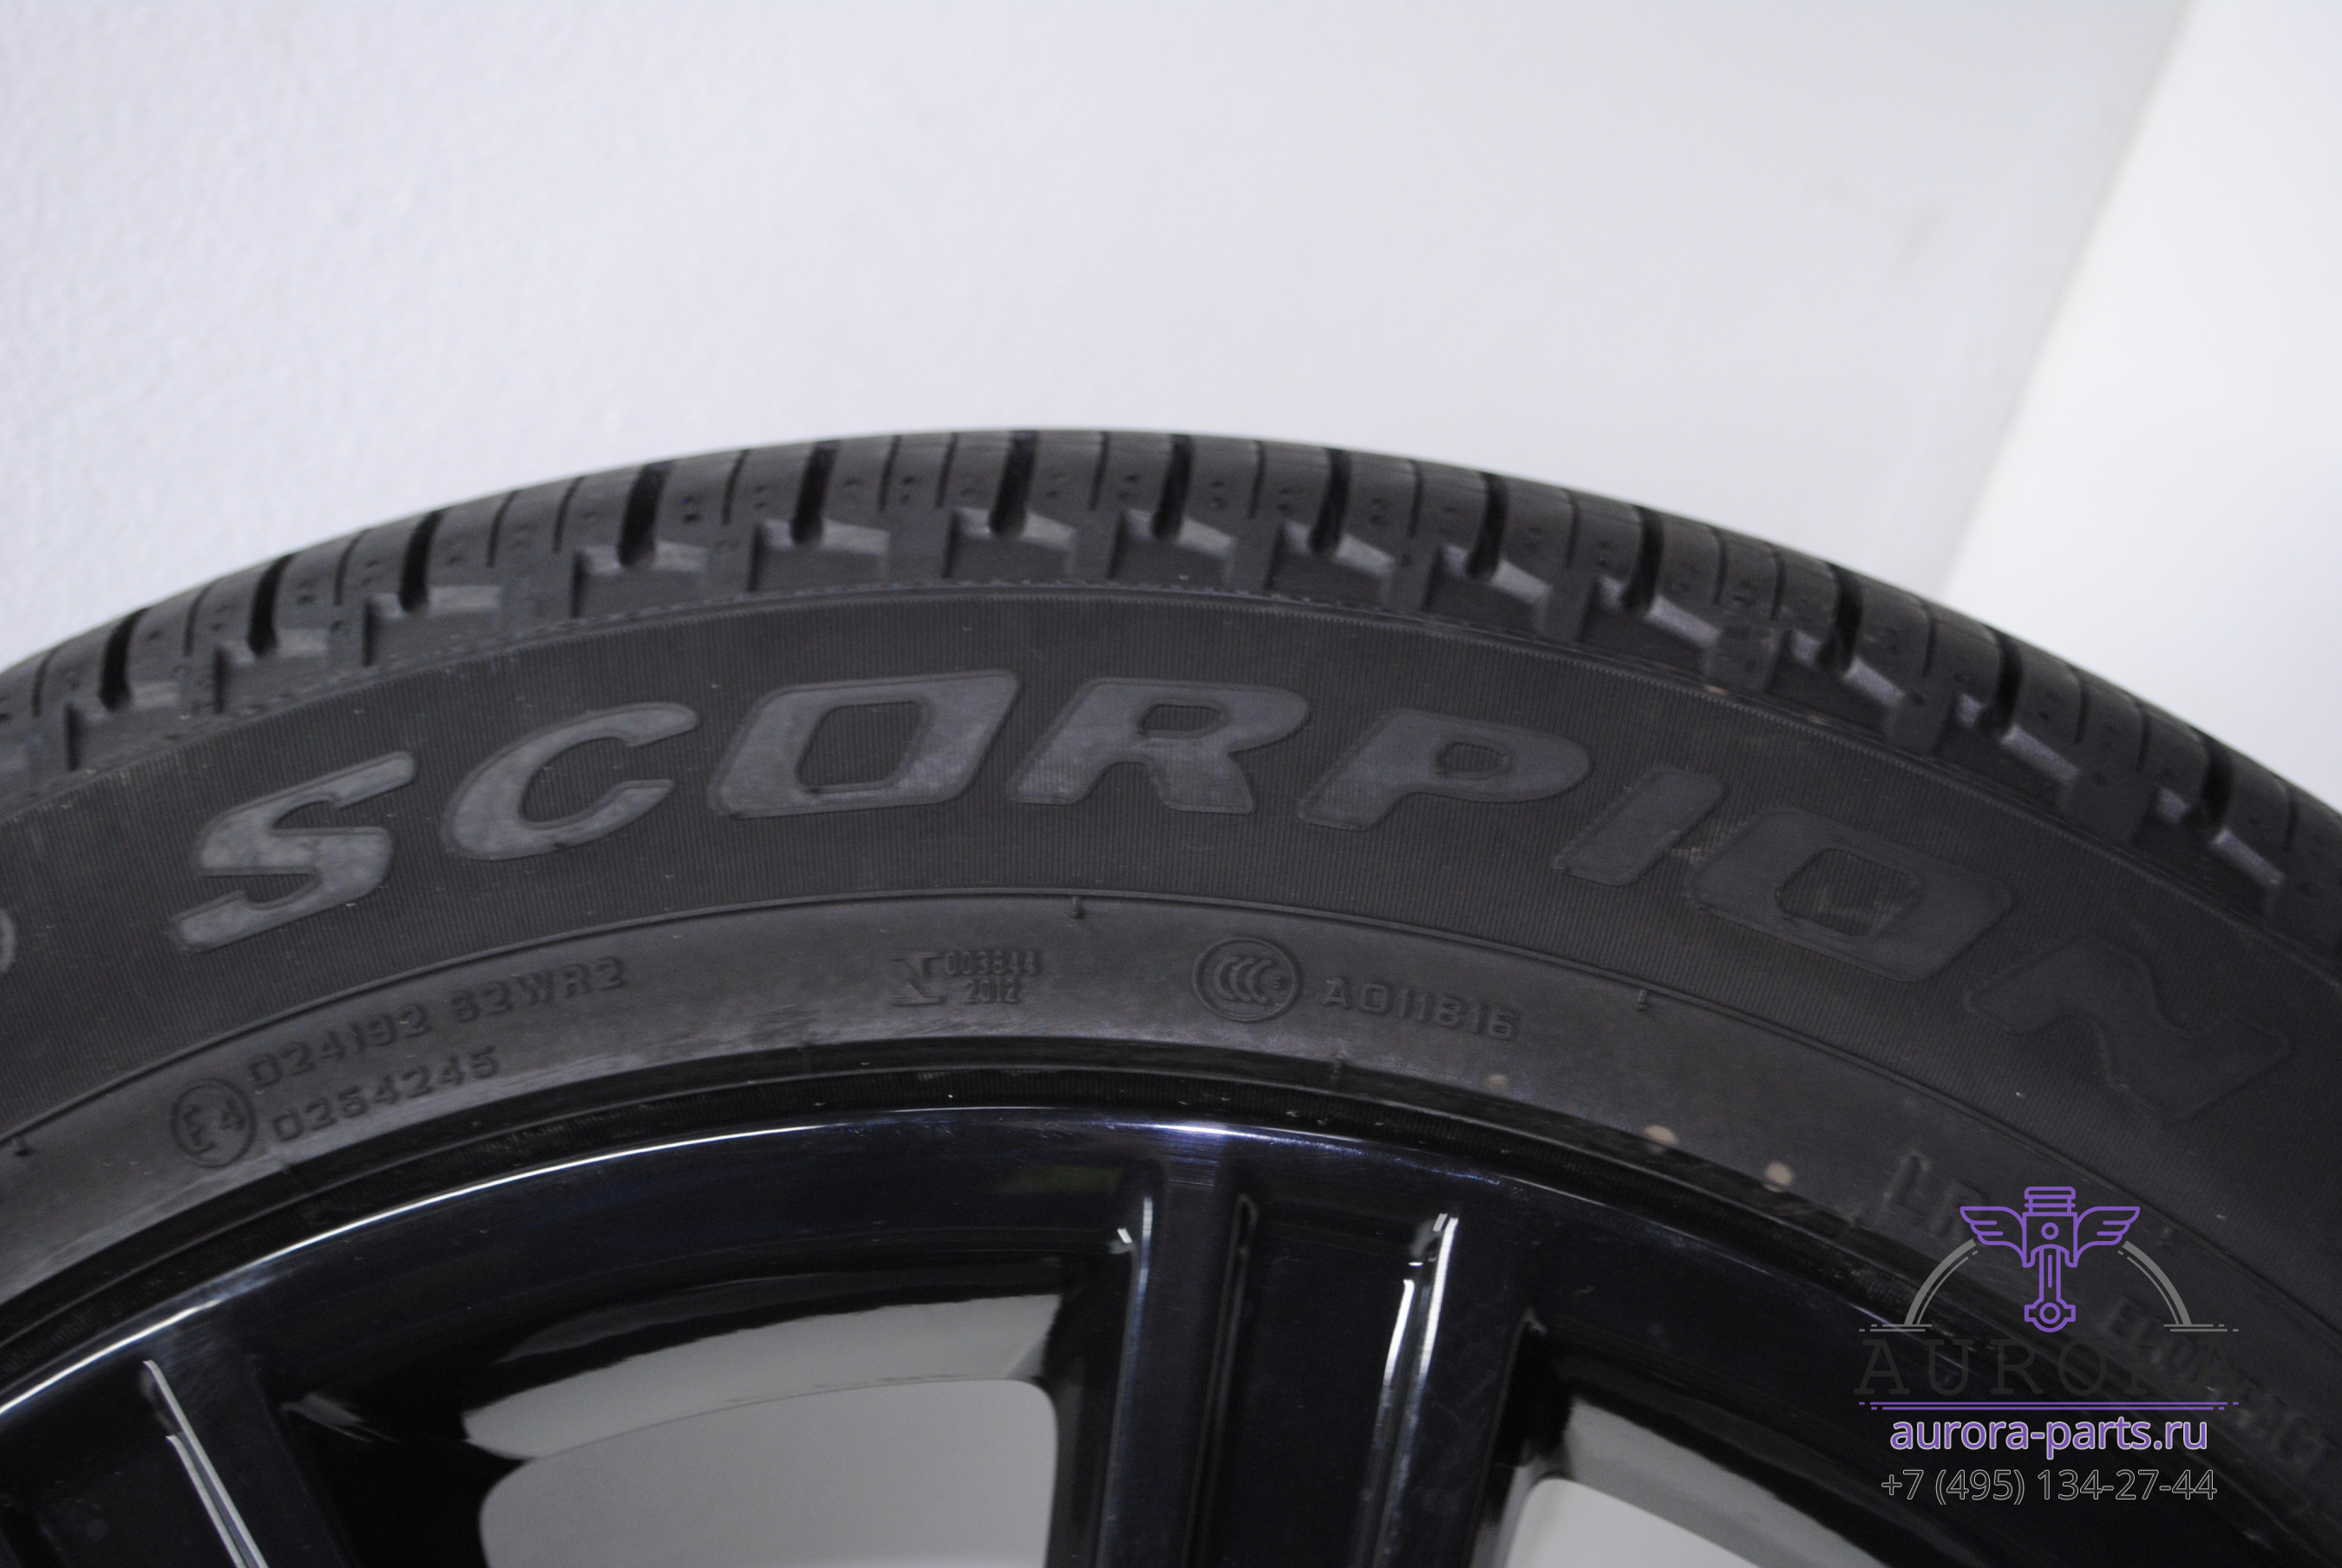 Pirelli scorpion r21